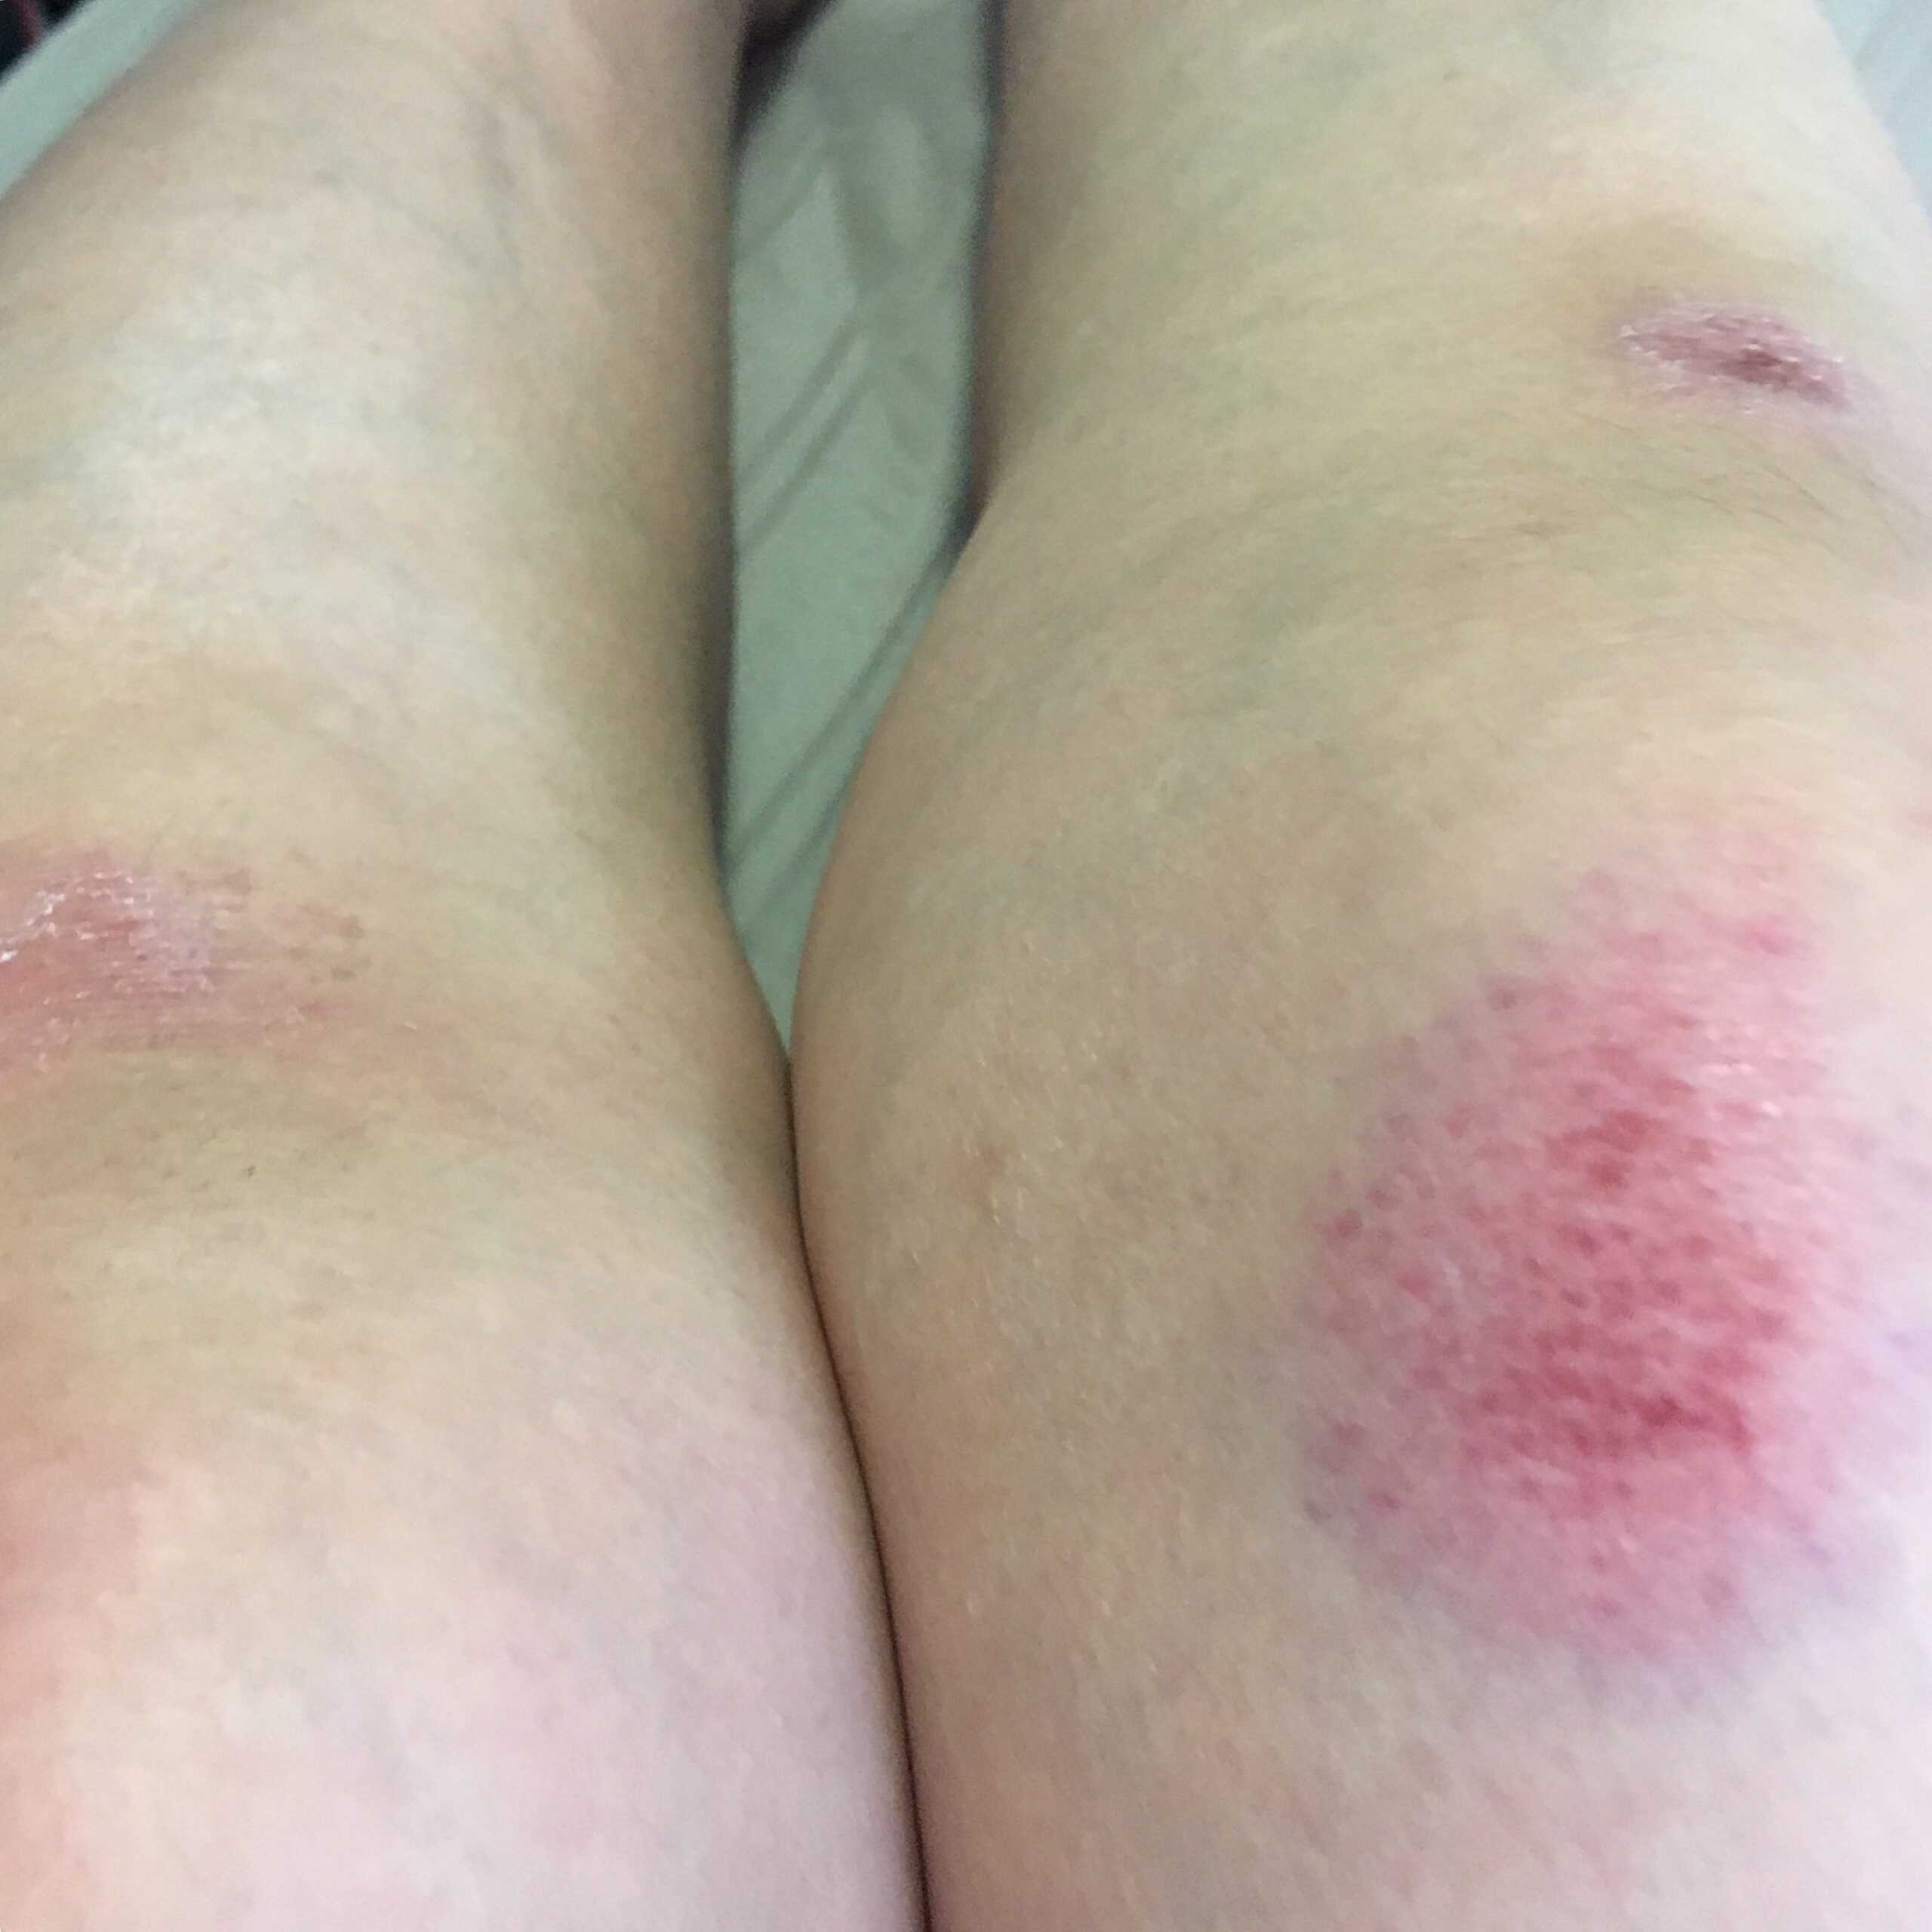 Close up image of bruised legs